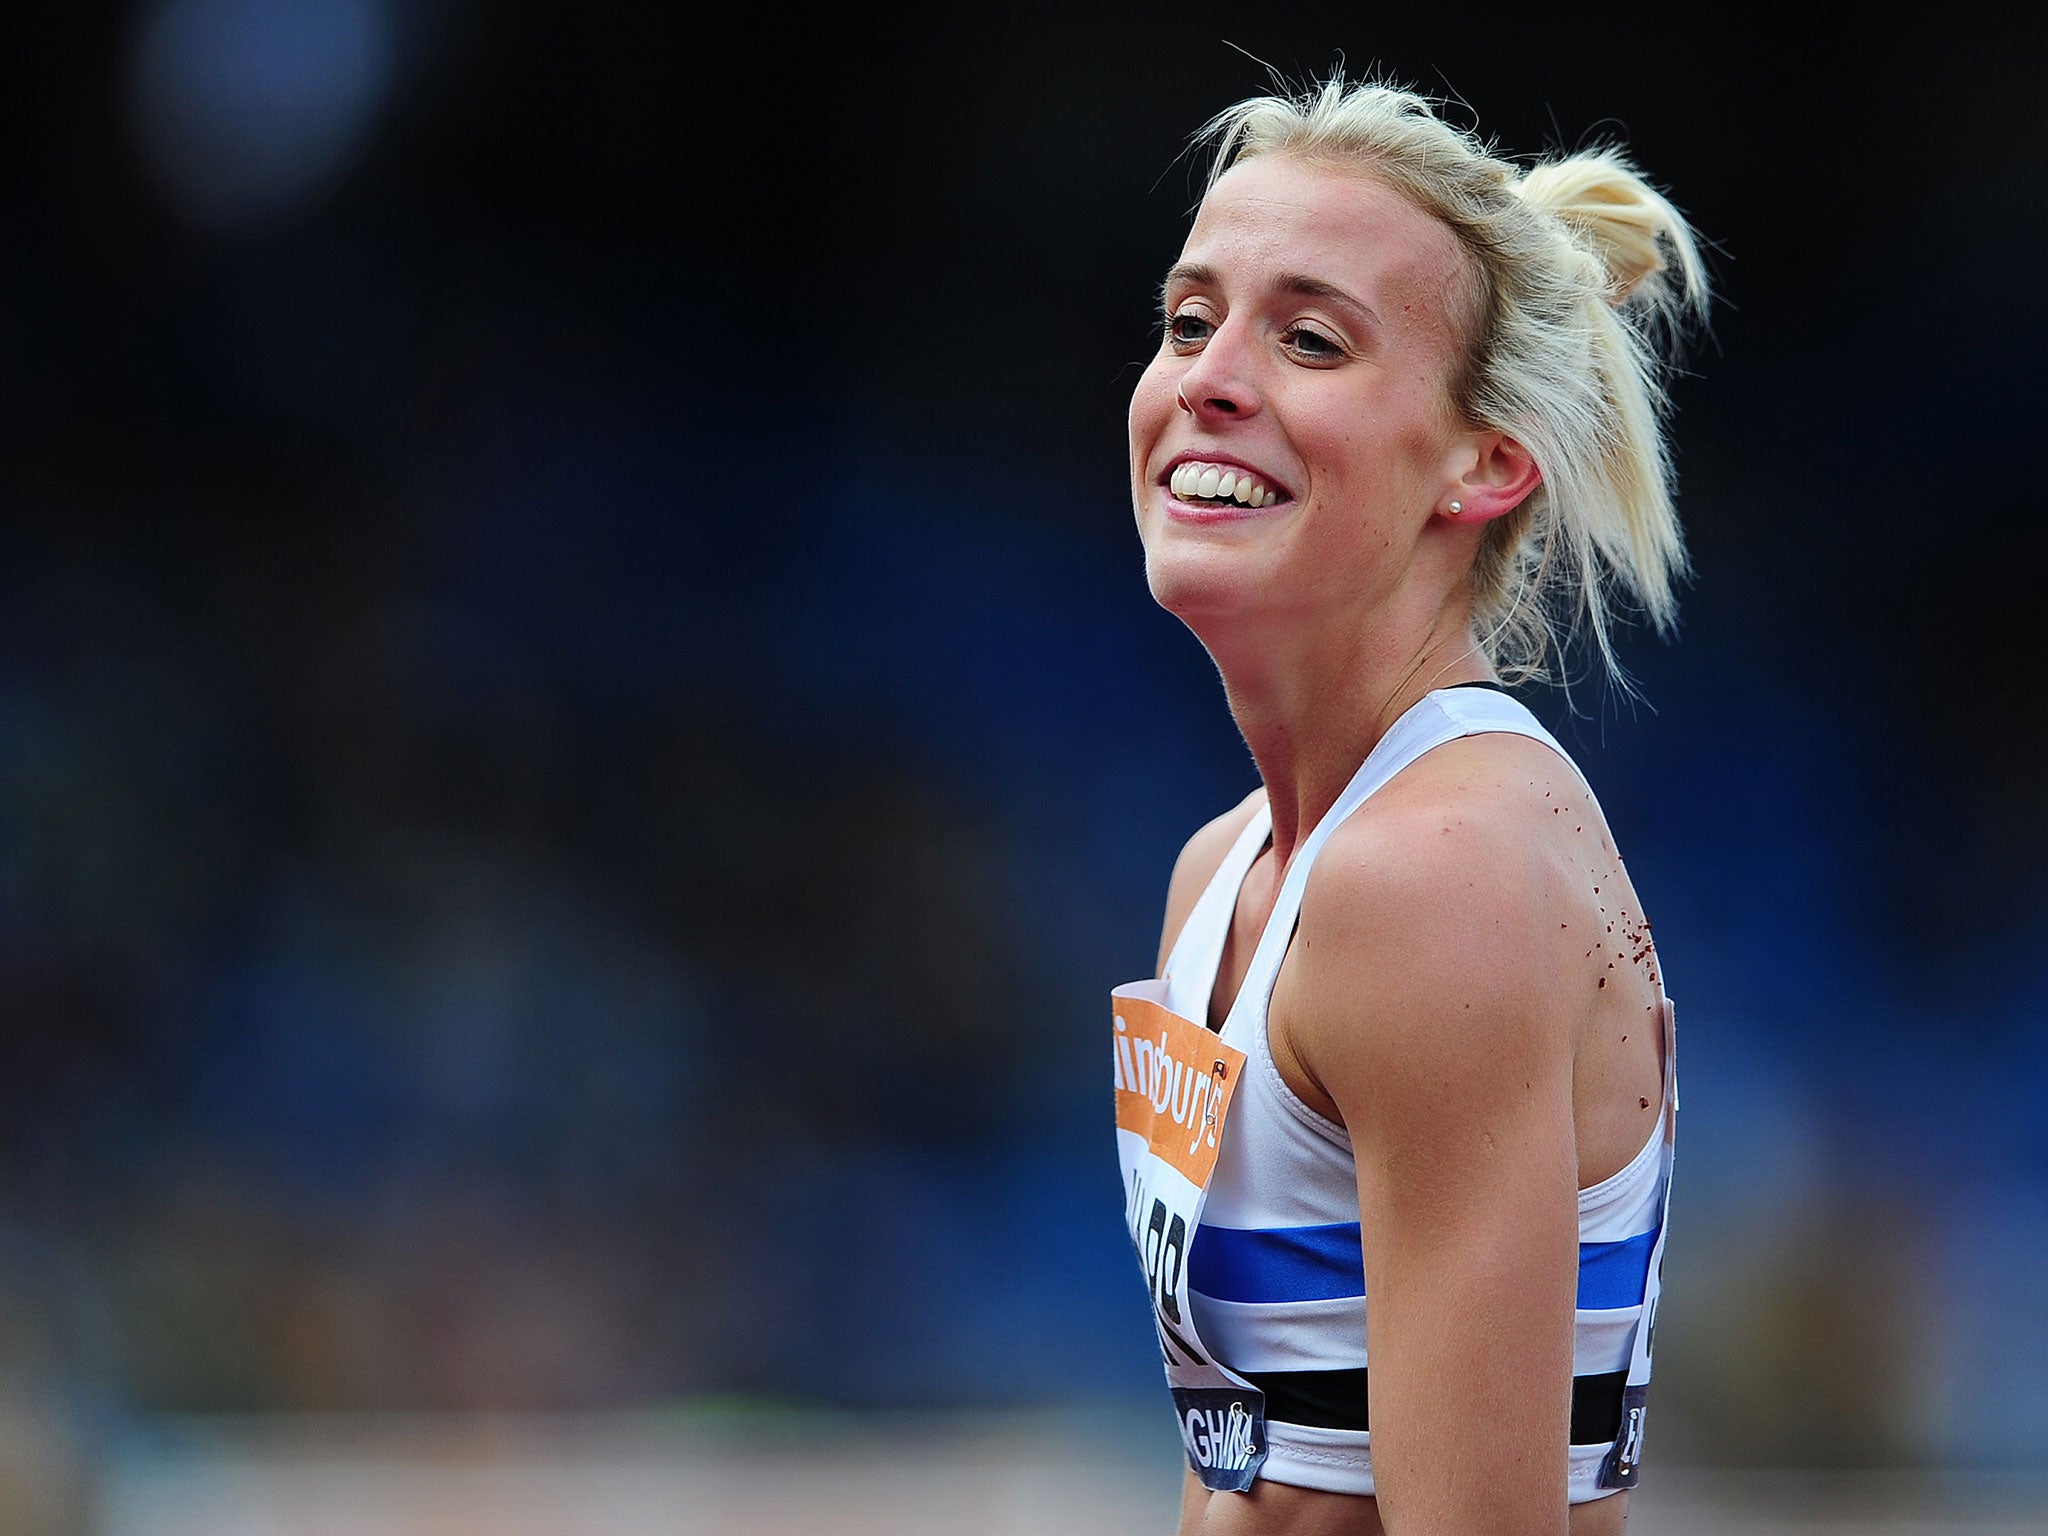 Lyndsey Sharp celebrates winning the women's 800m final